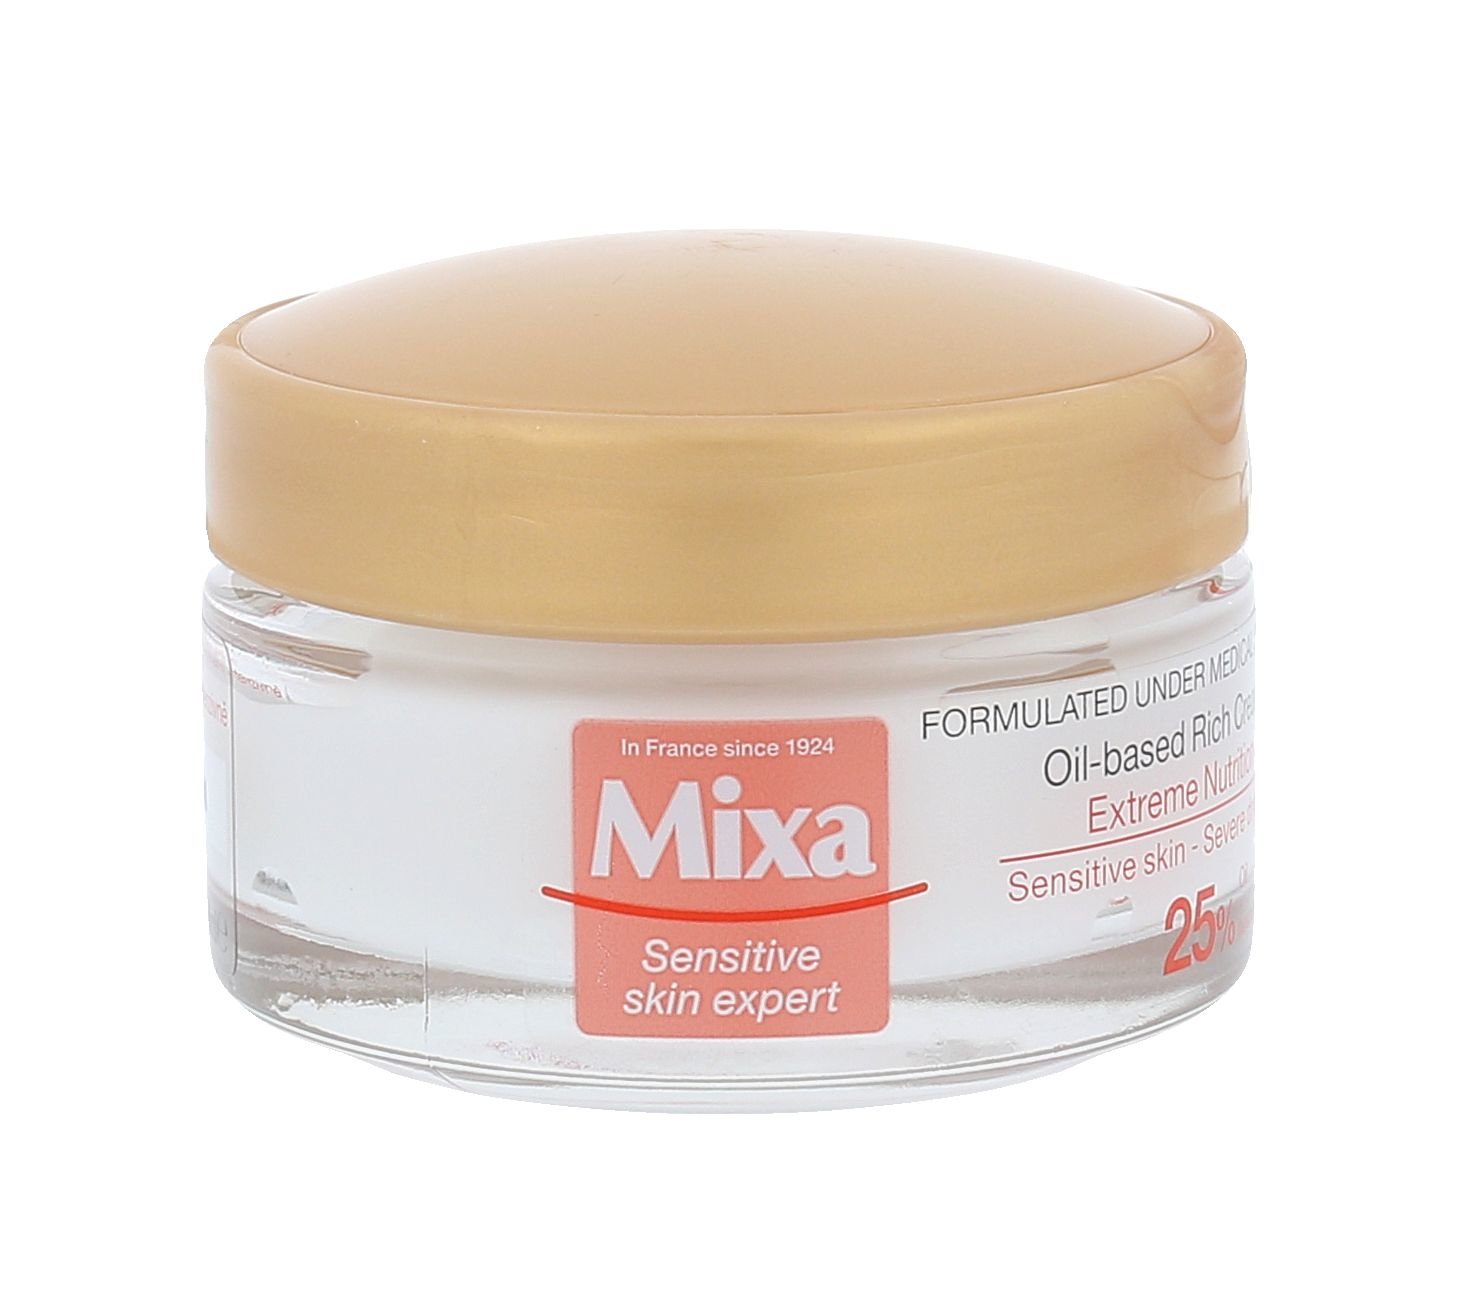 Mixa Extreme Nutrition Oil-based Rich Cream 50ml dieninis kremas